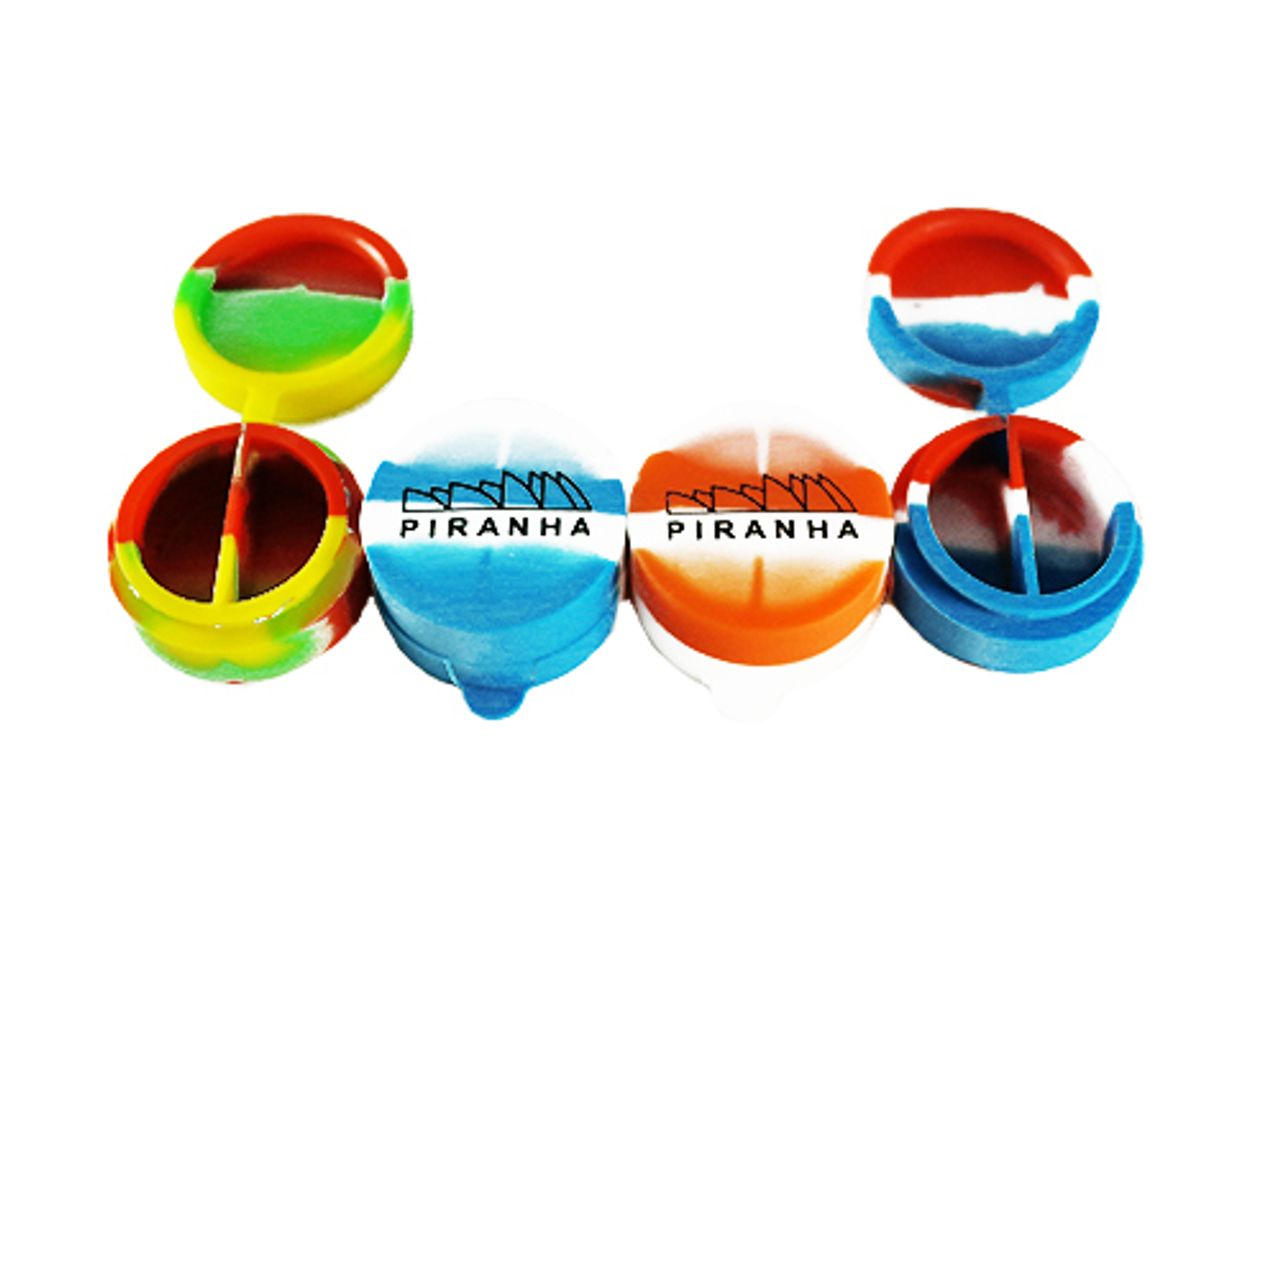 Piranha Silicone Container Flip Top Split Assorted Colors